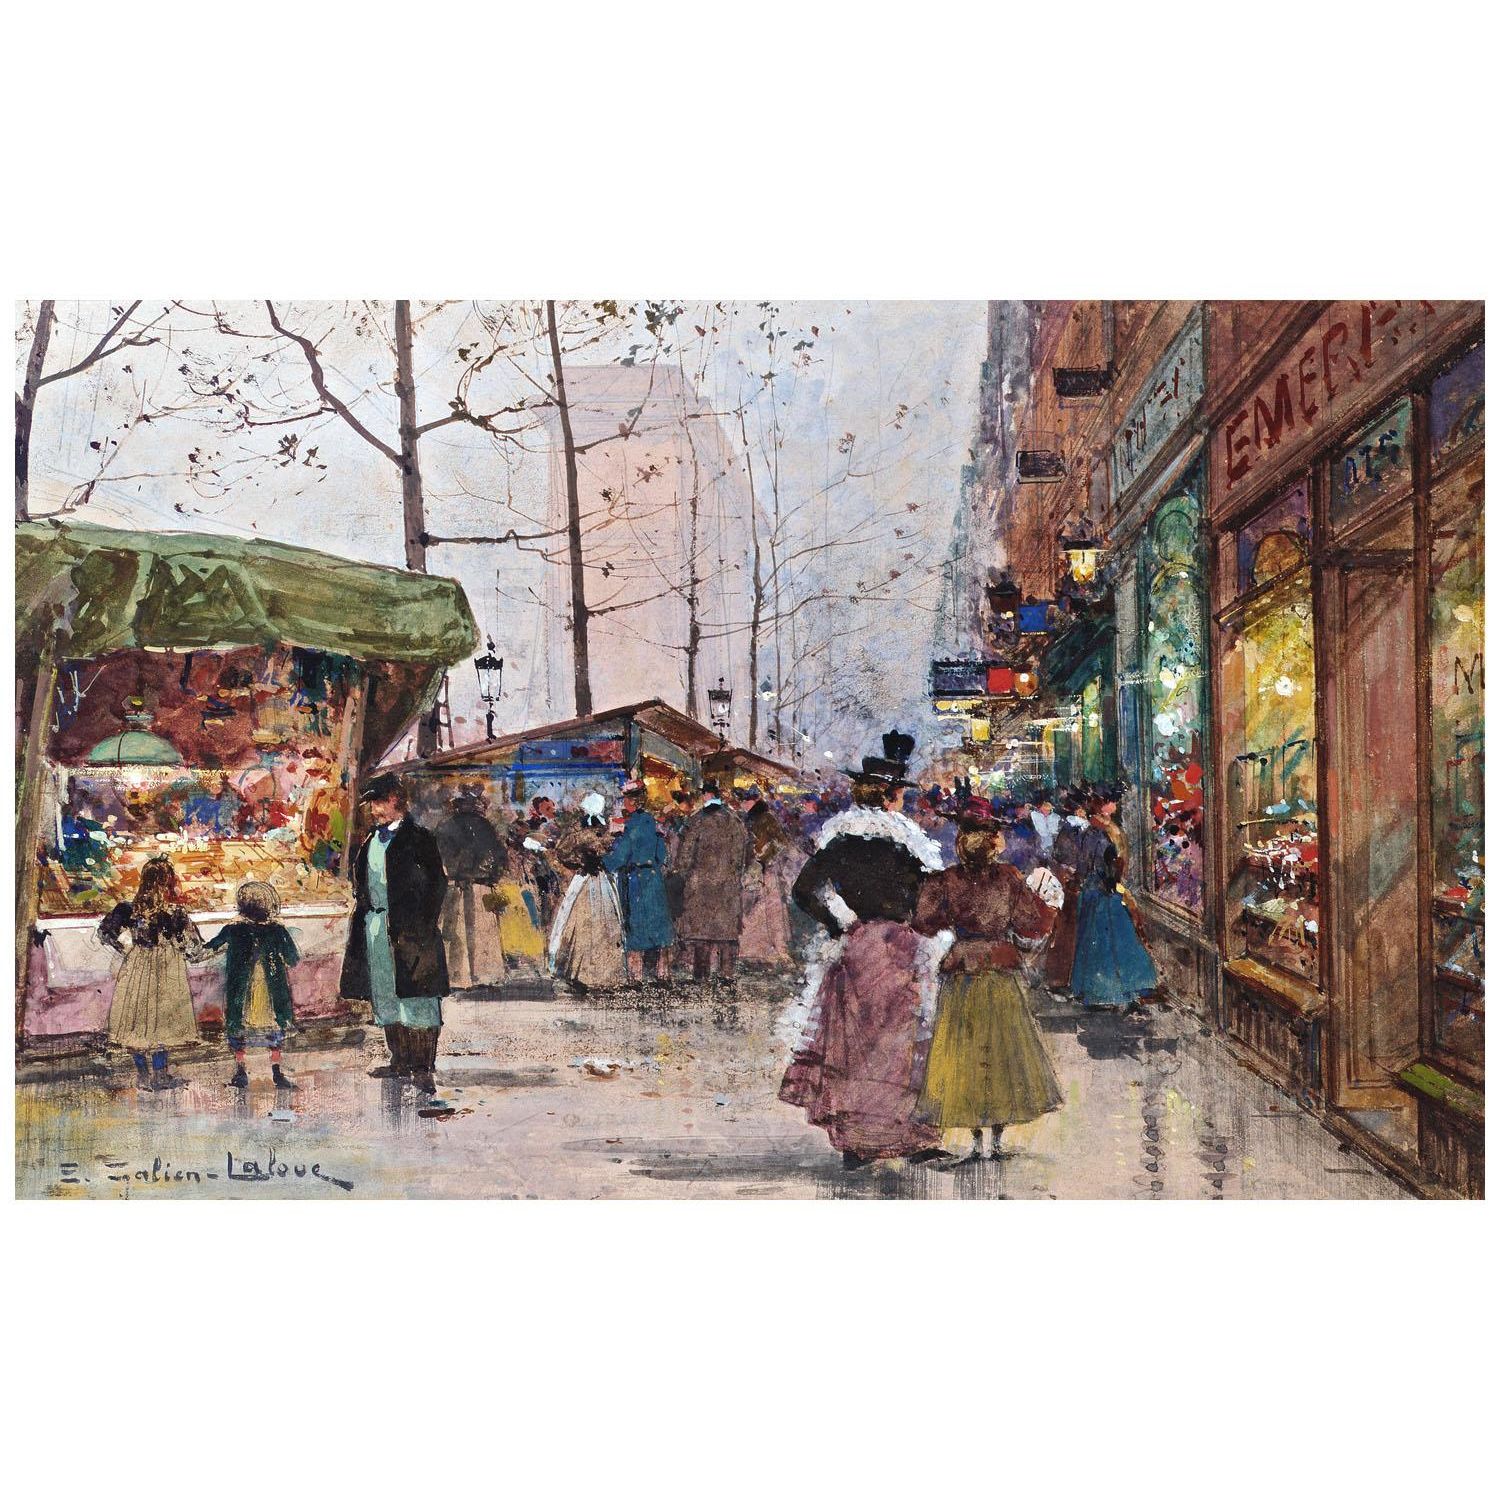 Eugène Galien-Laloue. Porte Saint-Martin. 1900